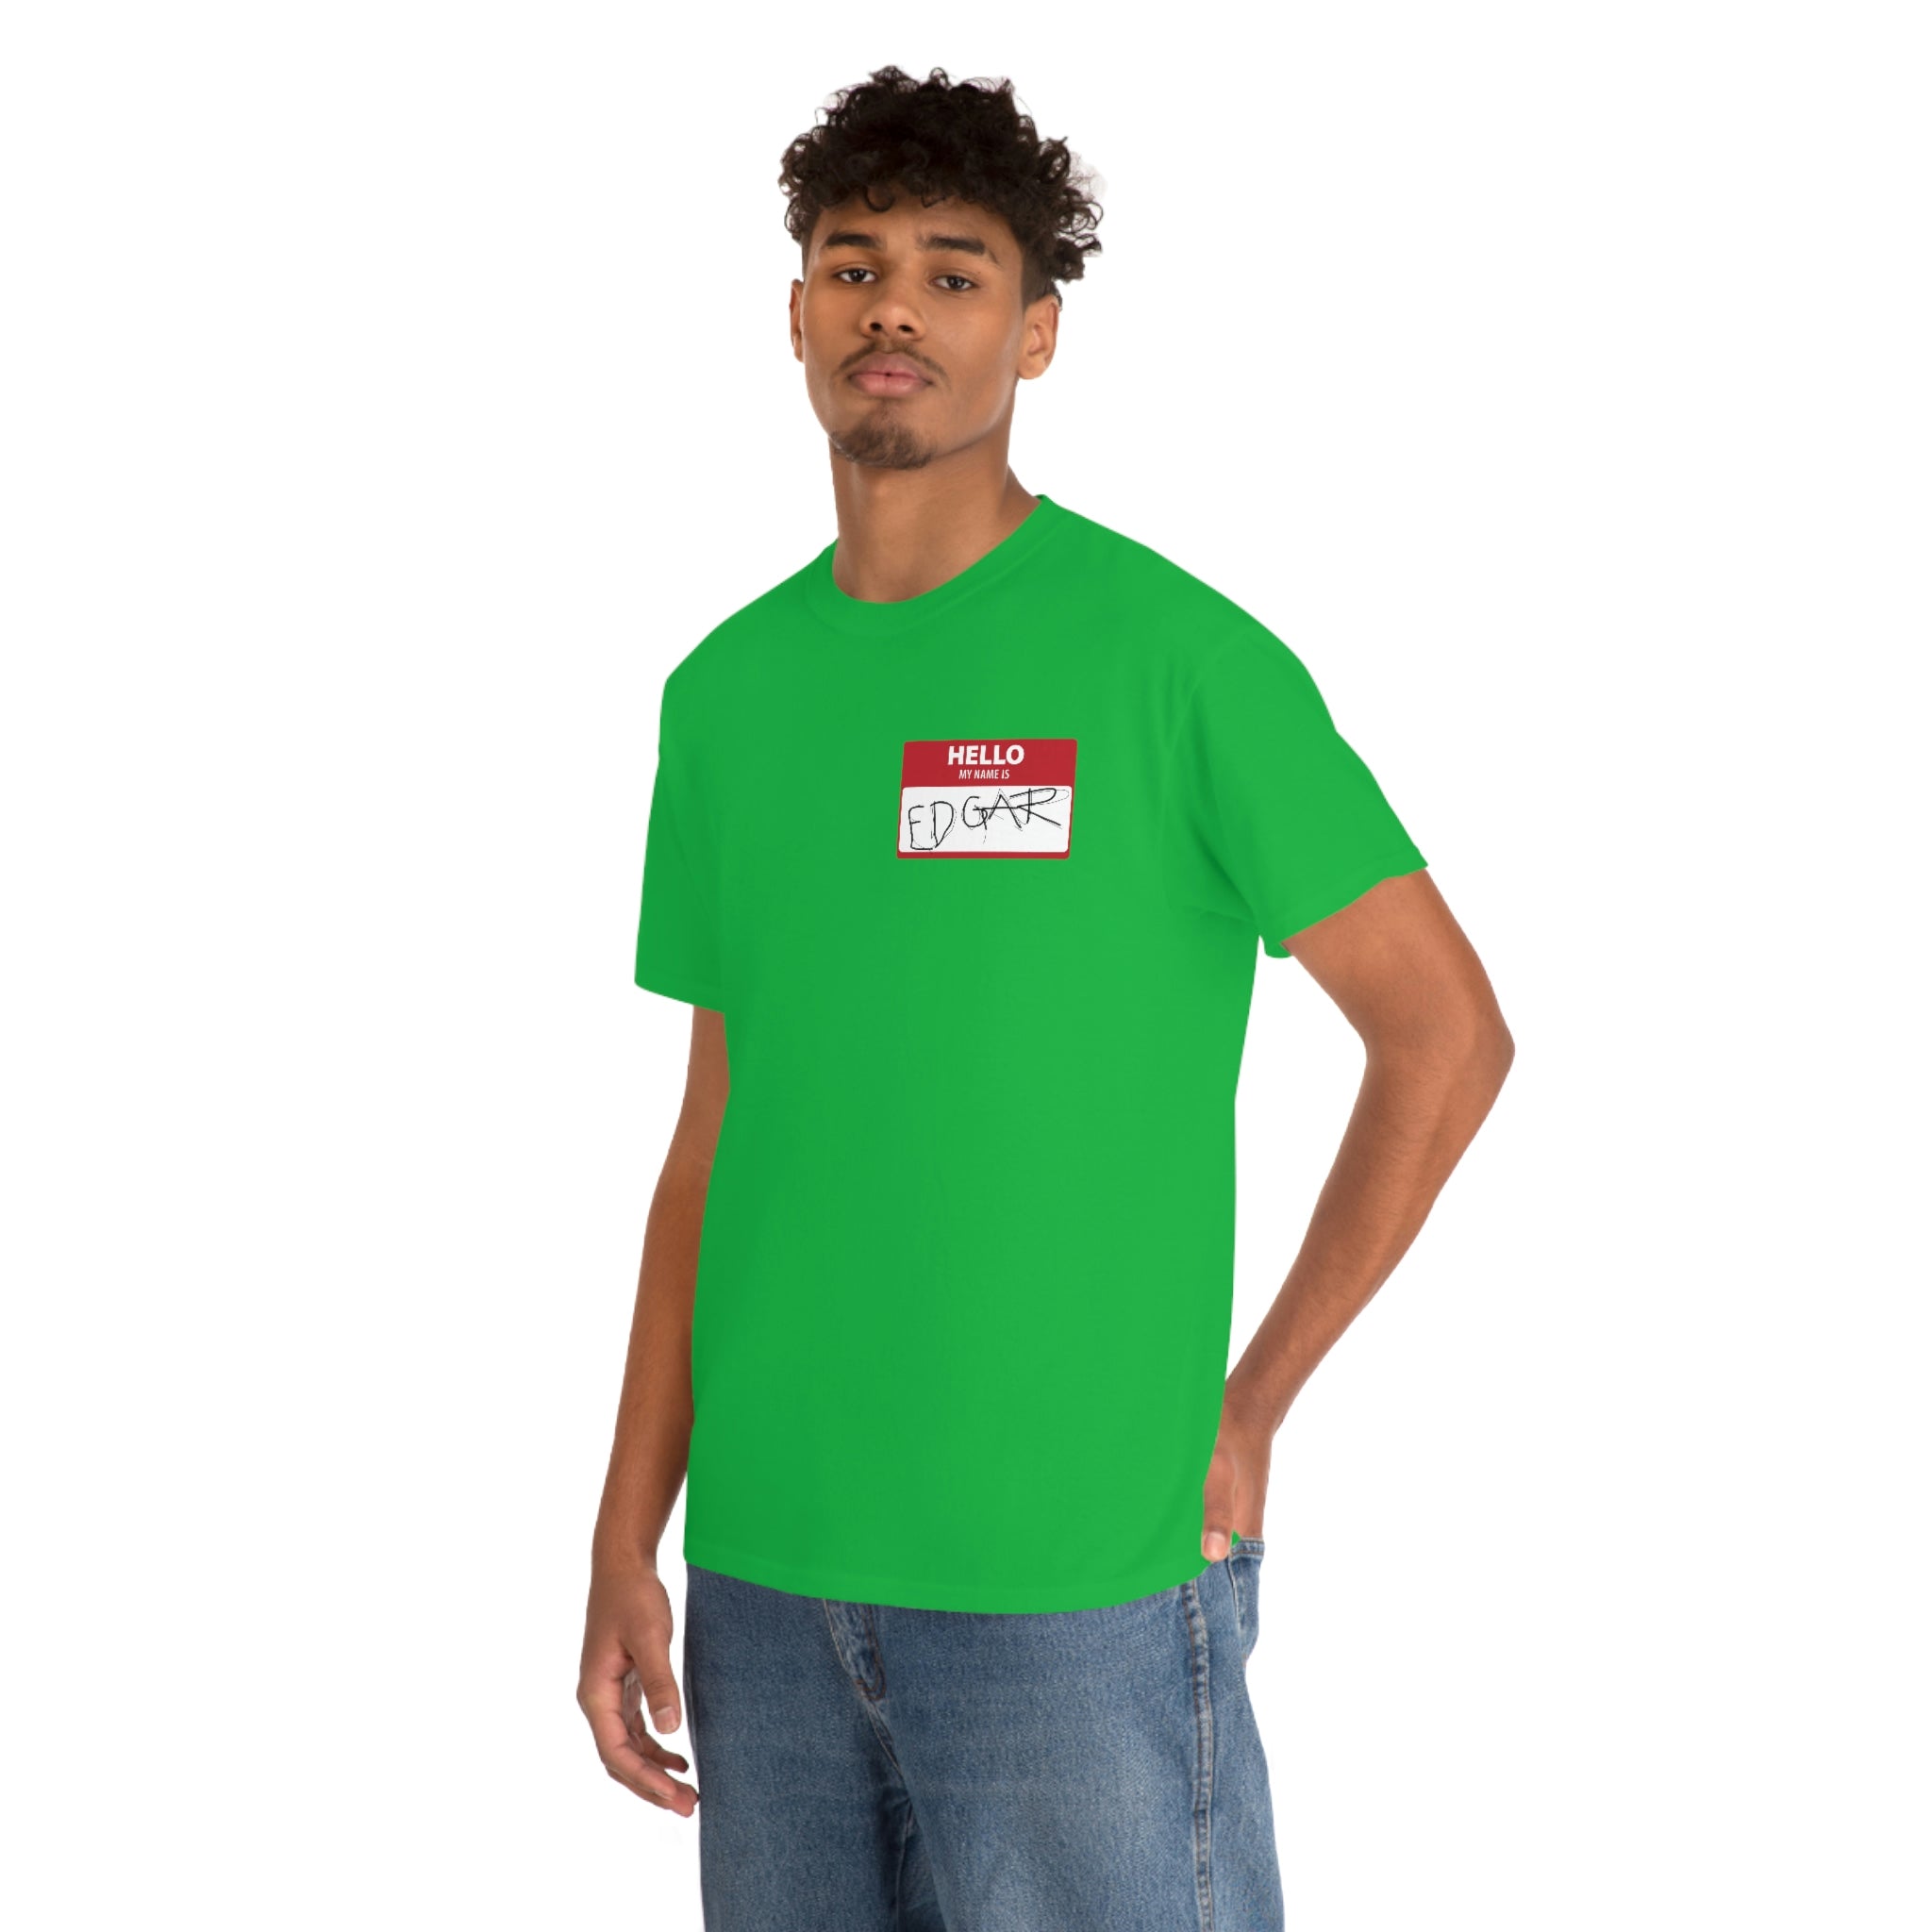 Edgar Name Tag Cotton Standard Fit Shirt